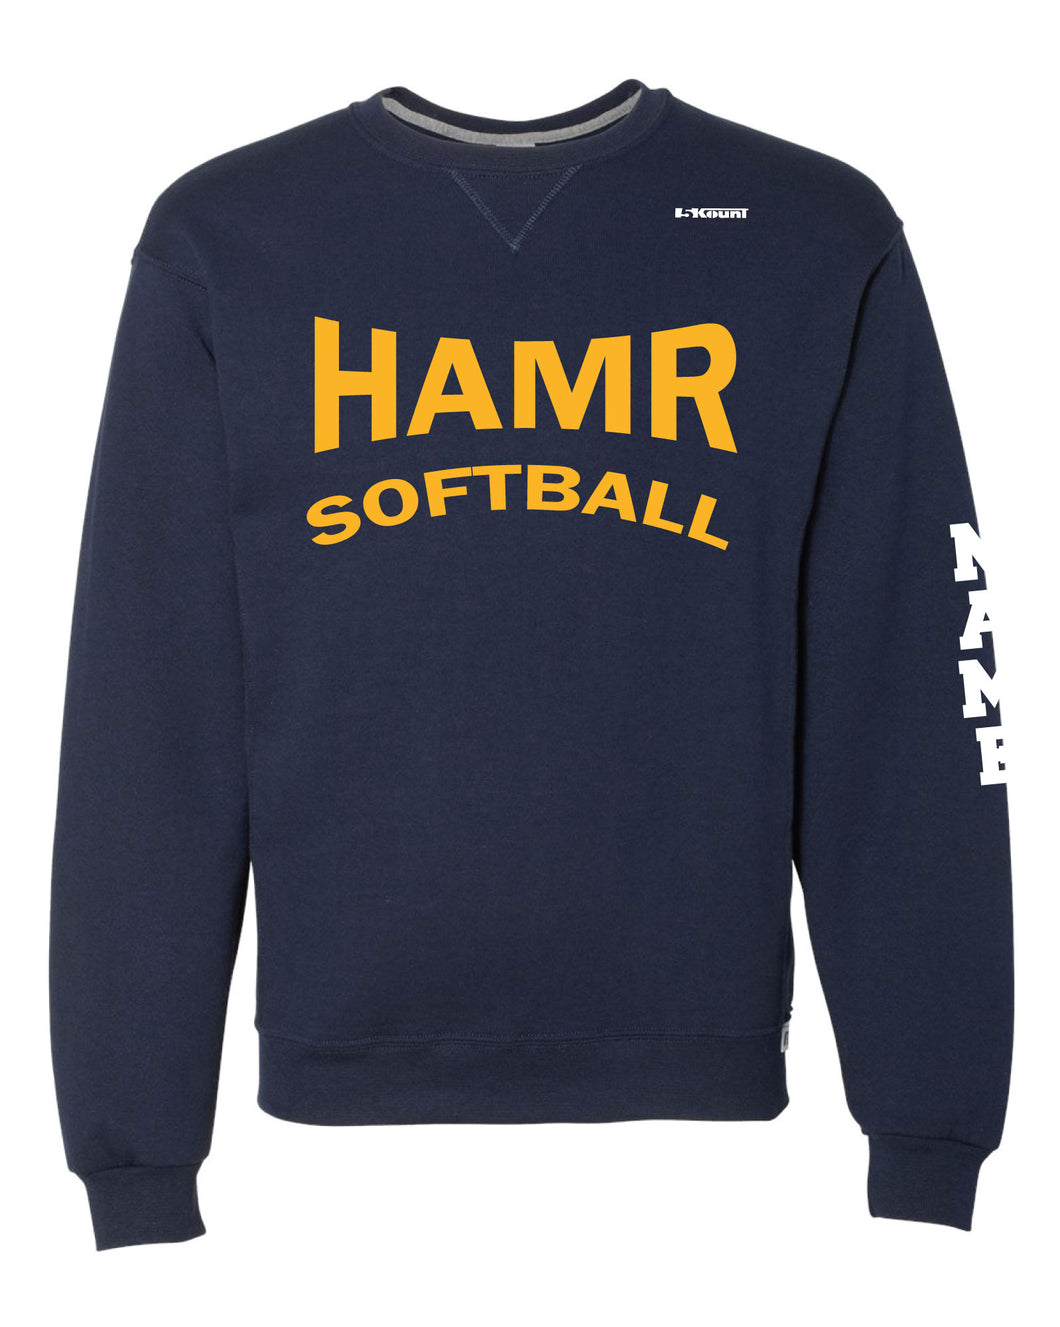 HAMR Softball Russell Athletic Cotton Crewneck Sweatshirt - Navy - 5KounT2018